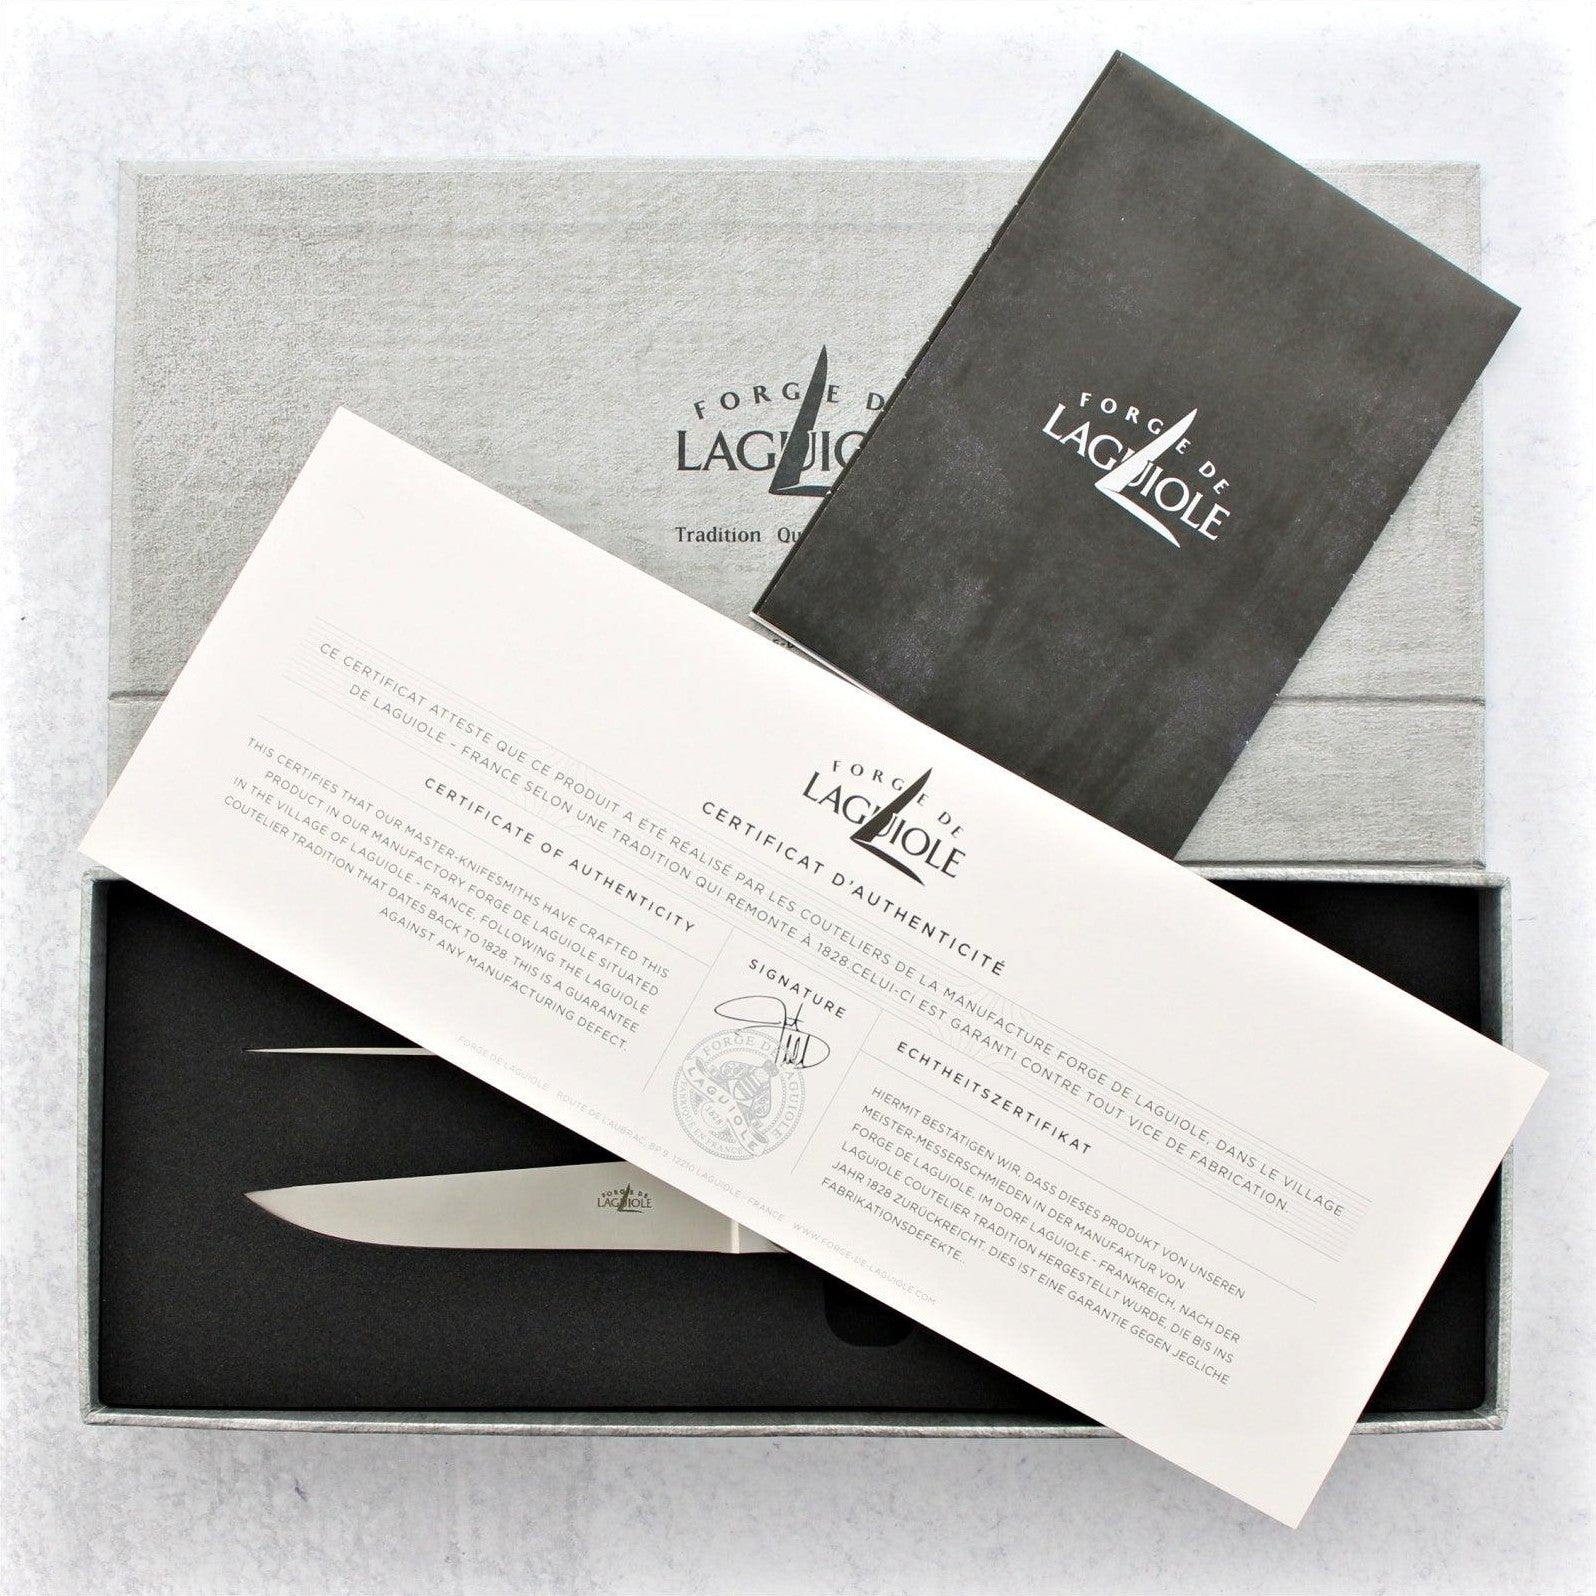 Steak Knives - Handmade Olive Wood Steak Knife Sets – Goya Blue